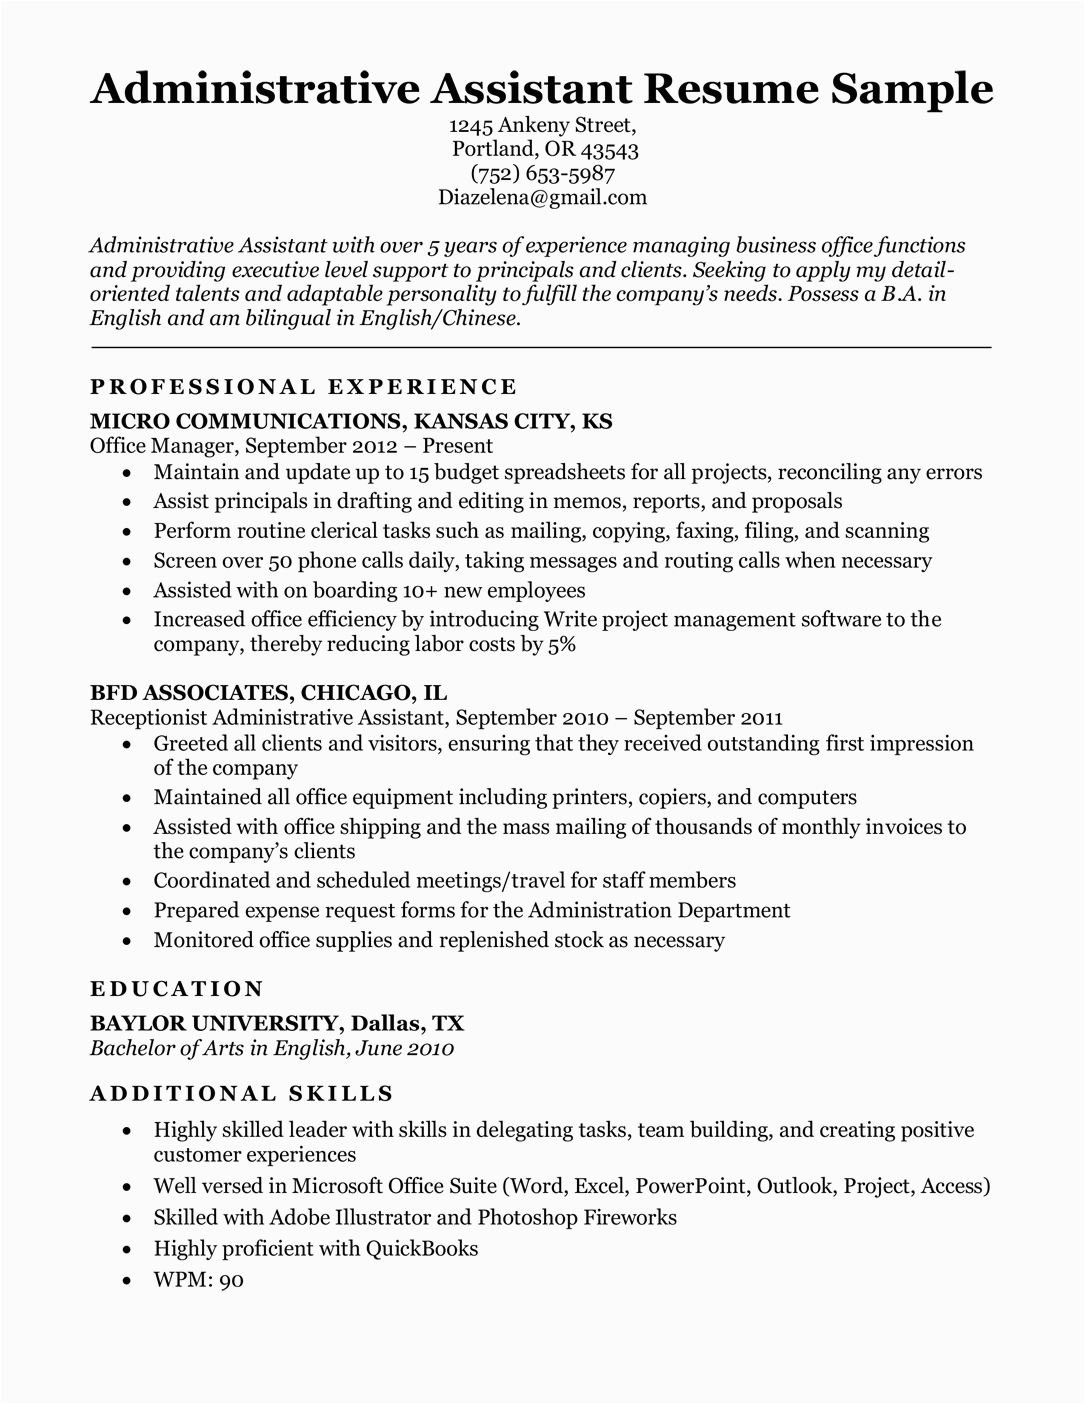 Sample Resume format for Administrative assistant Administrative assistant Resume Example